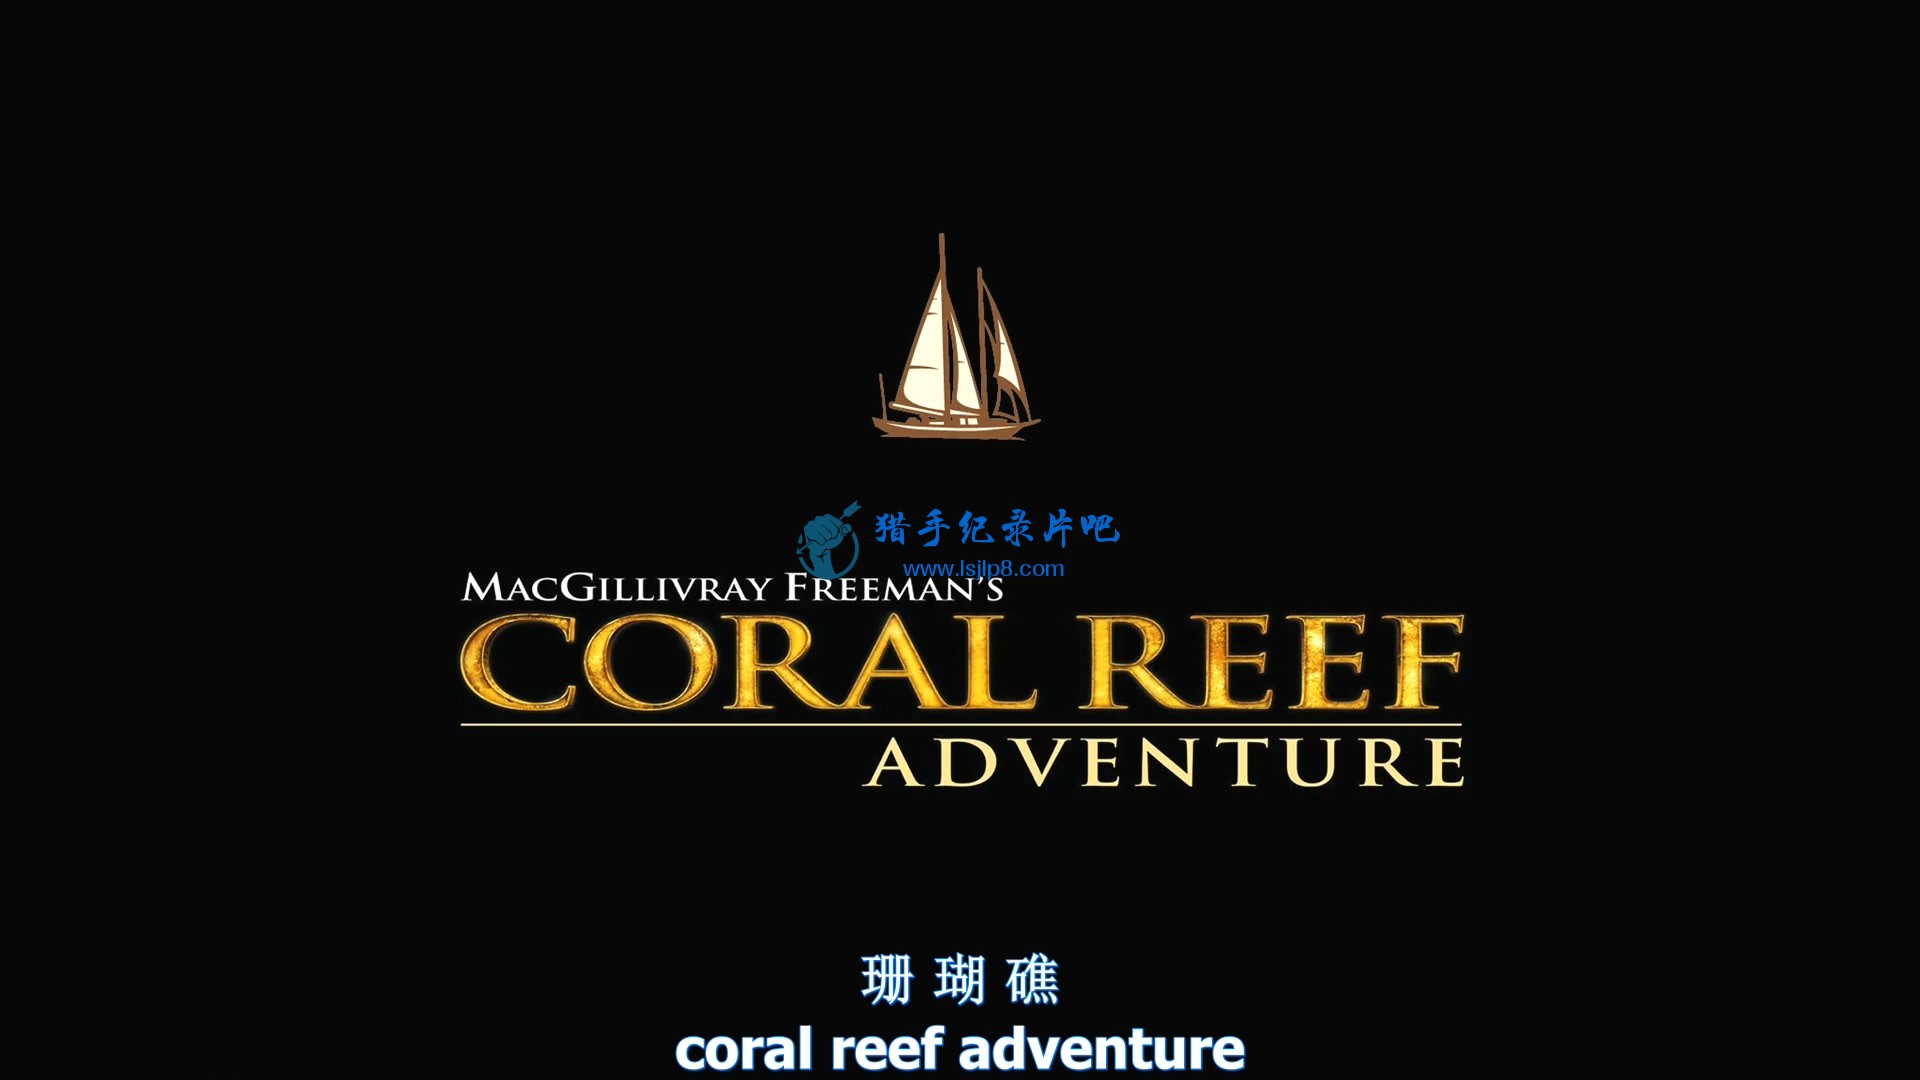 IMAX - Coral.Reef.Adventure.1080p.BluRay.DTS.x264.mkv_20200503_093453.830.jpg